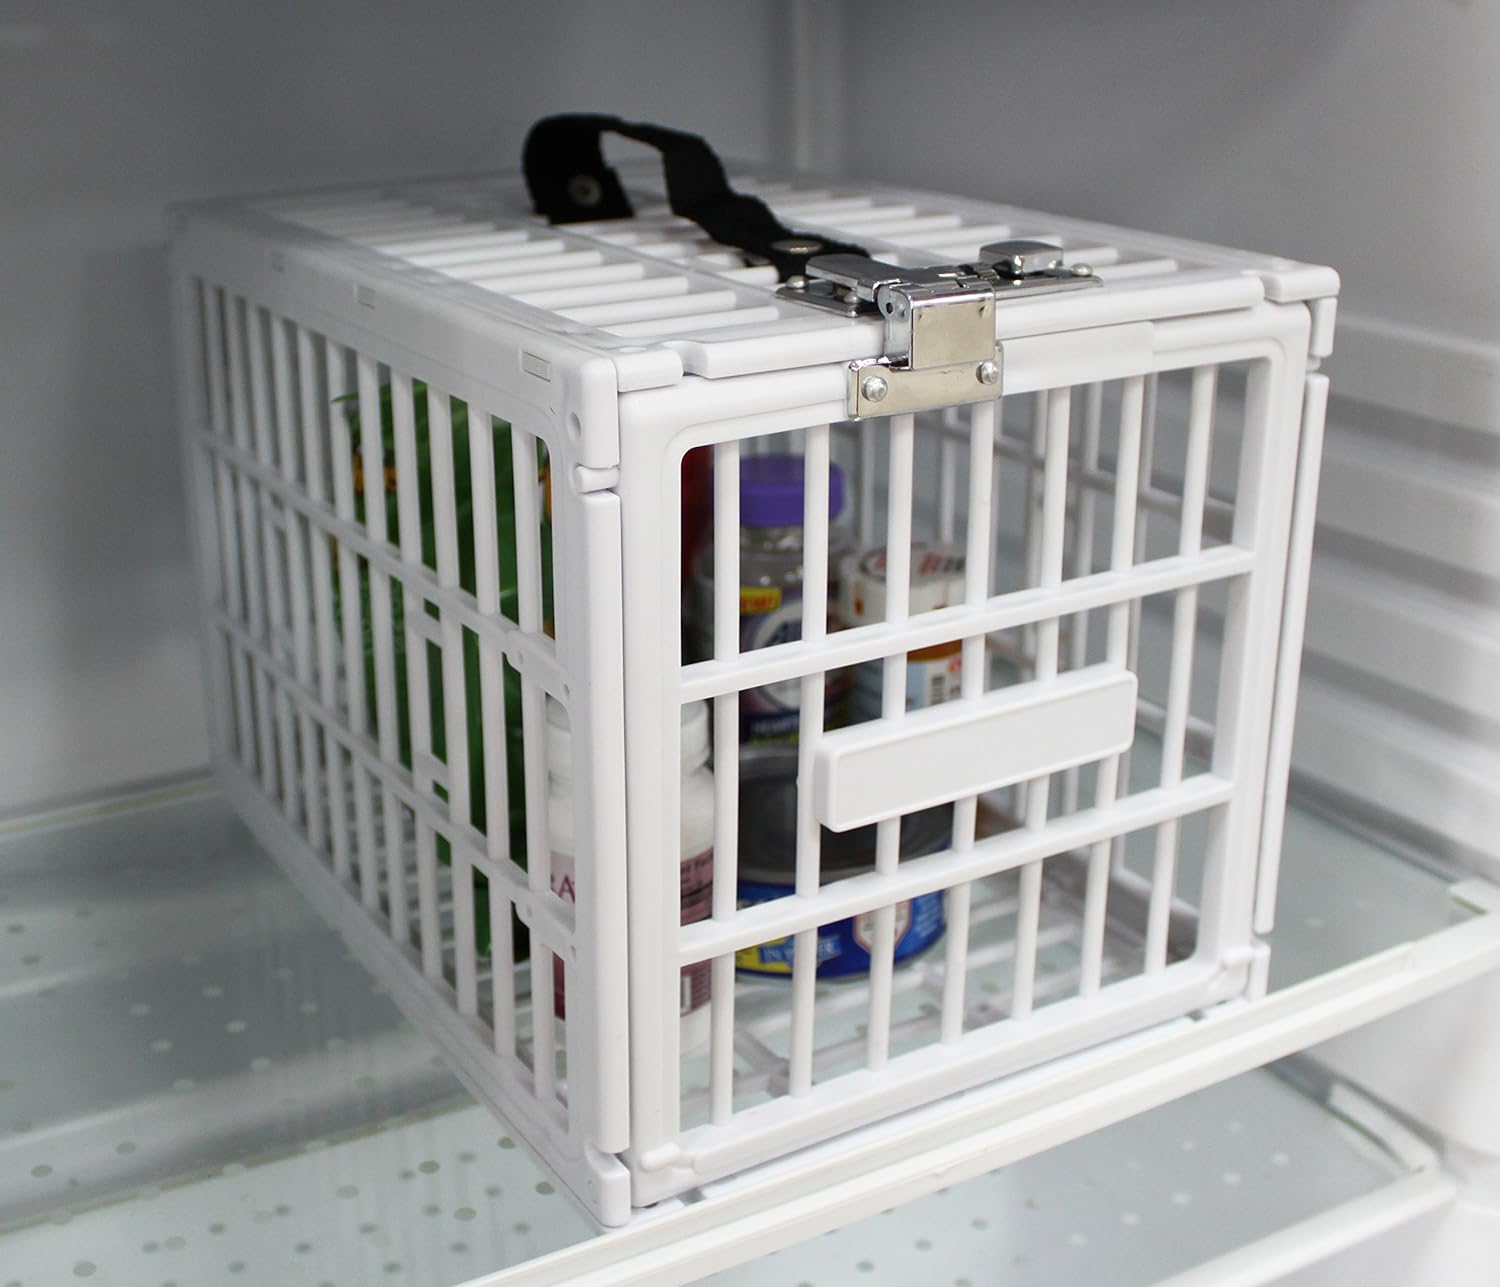 A storage locker or safe box.